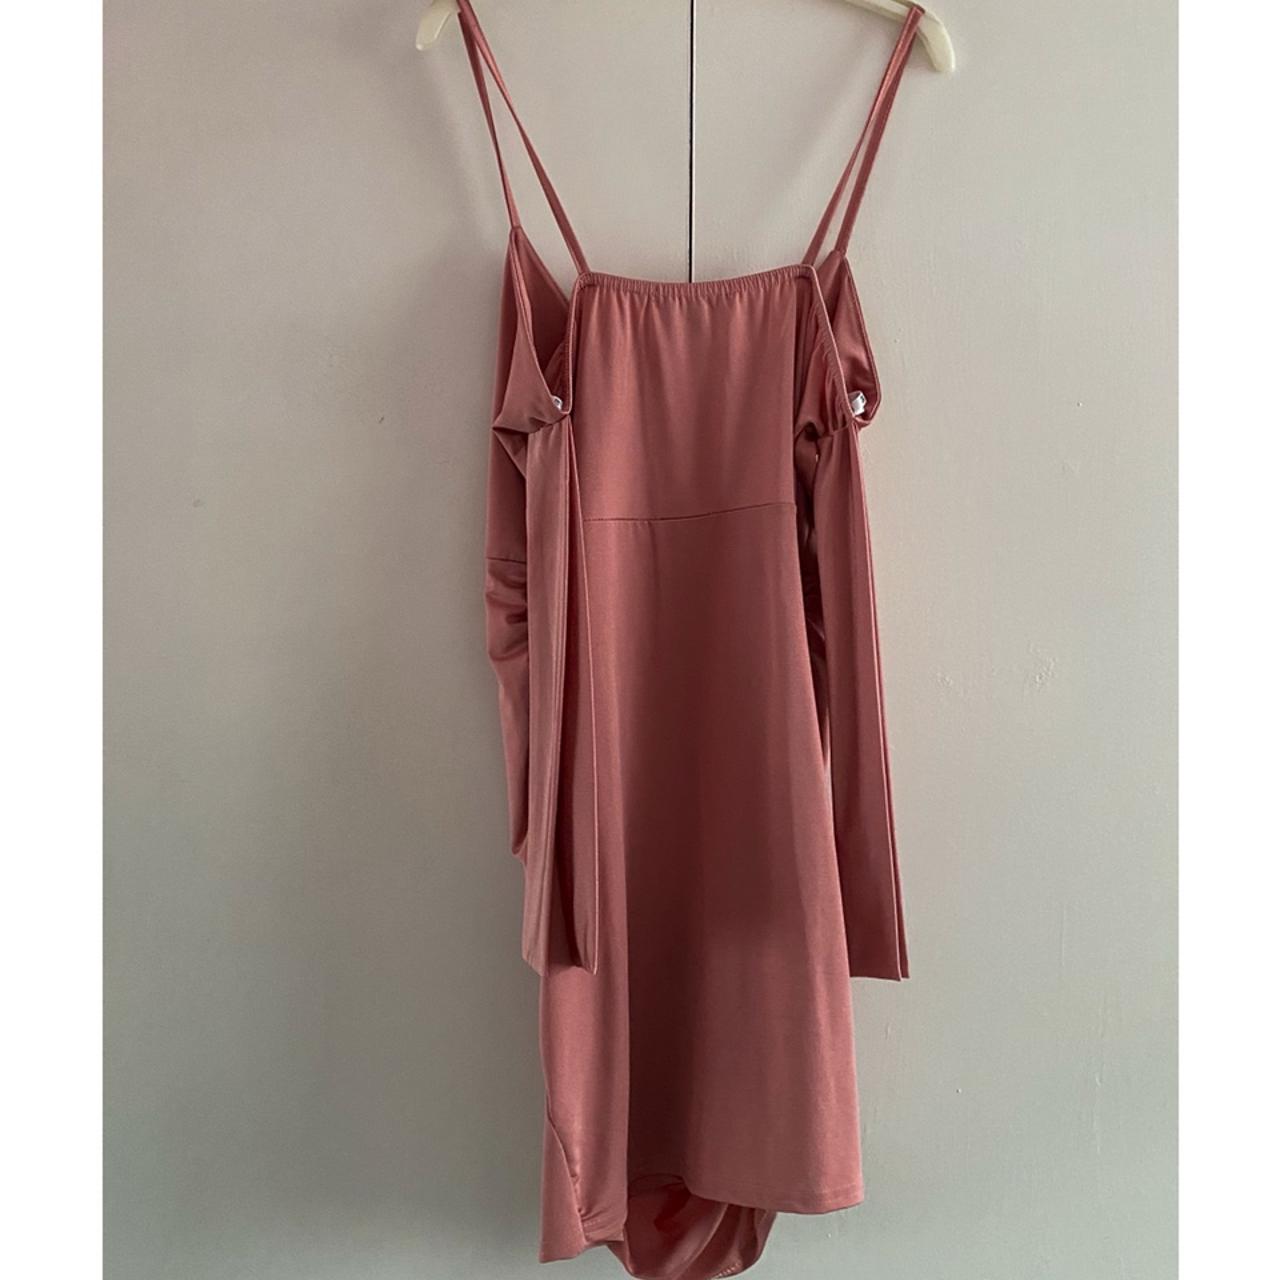 Missguided Women's Pink Dress (2)